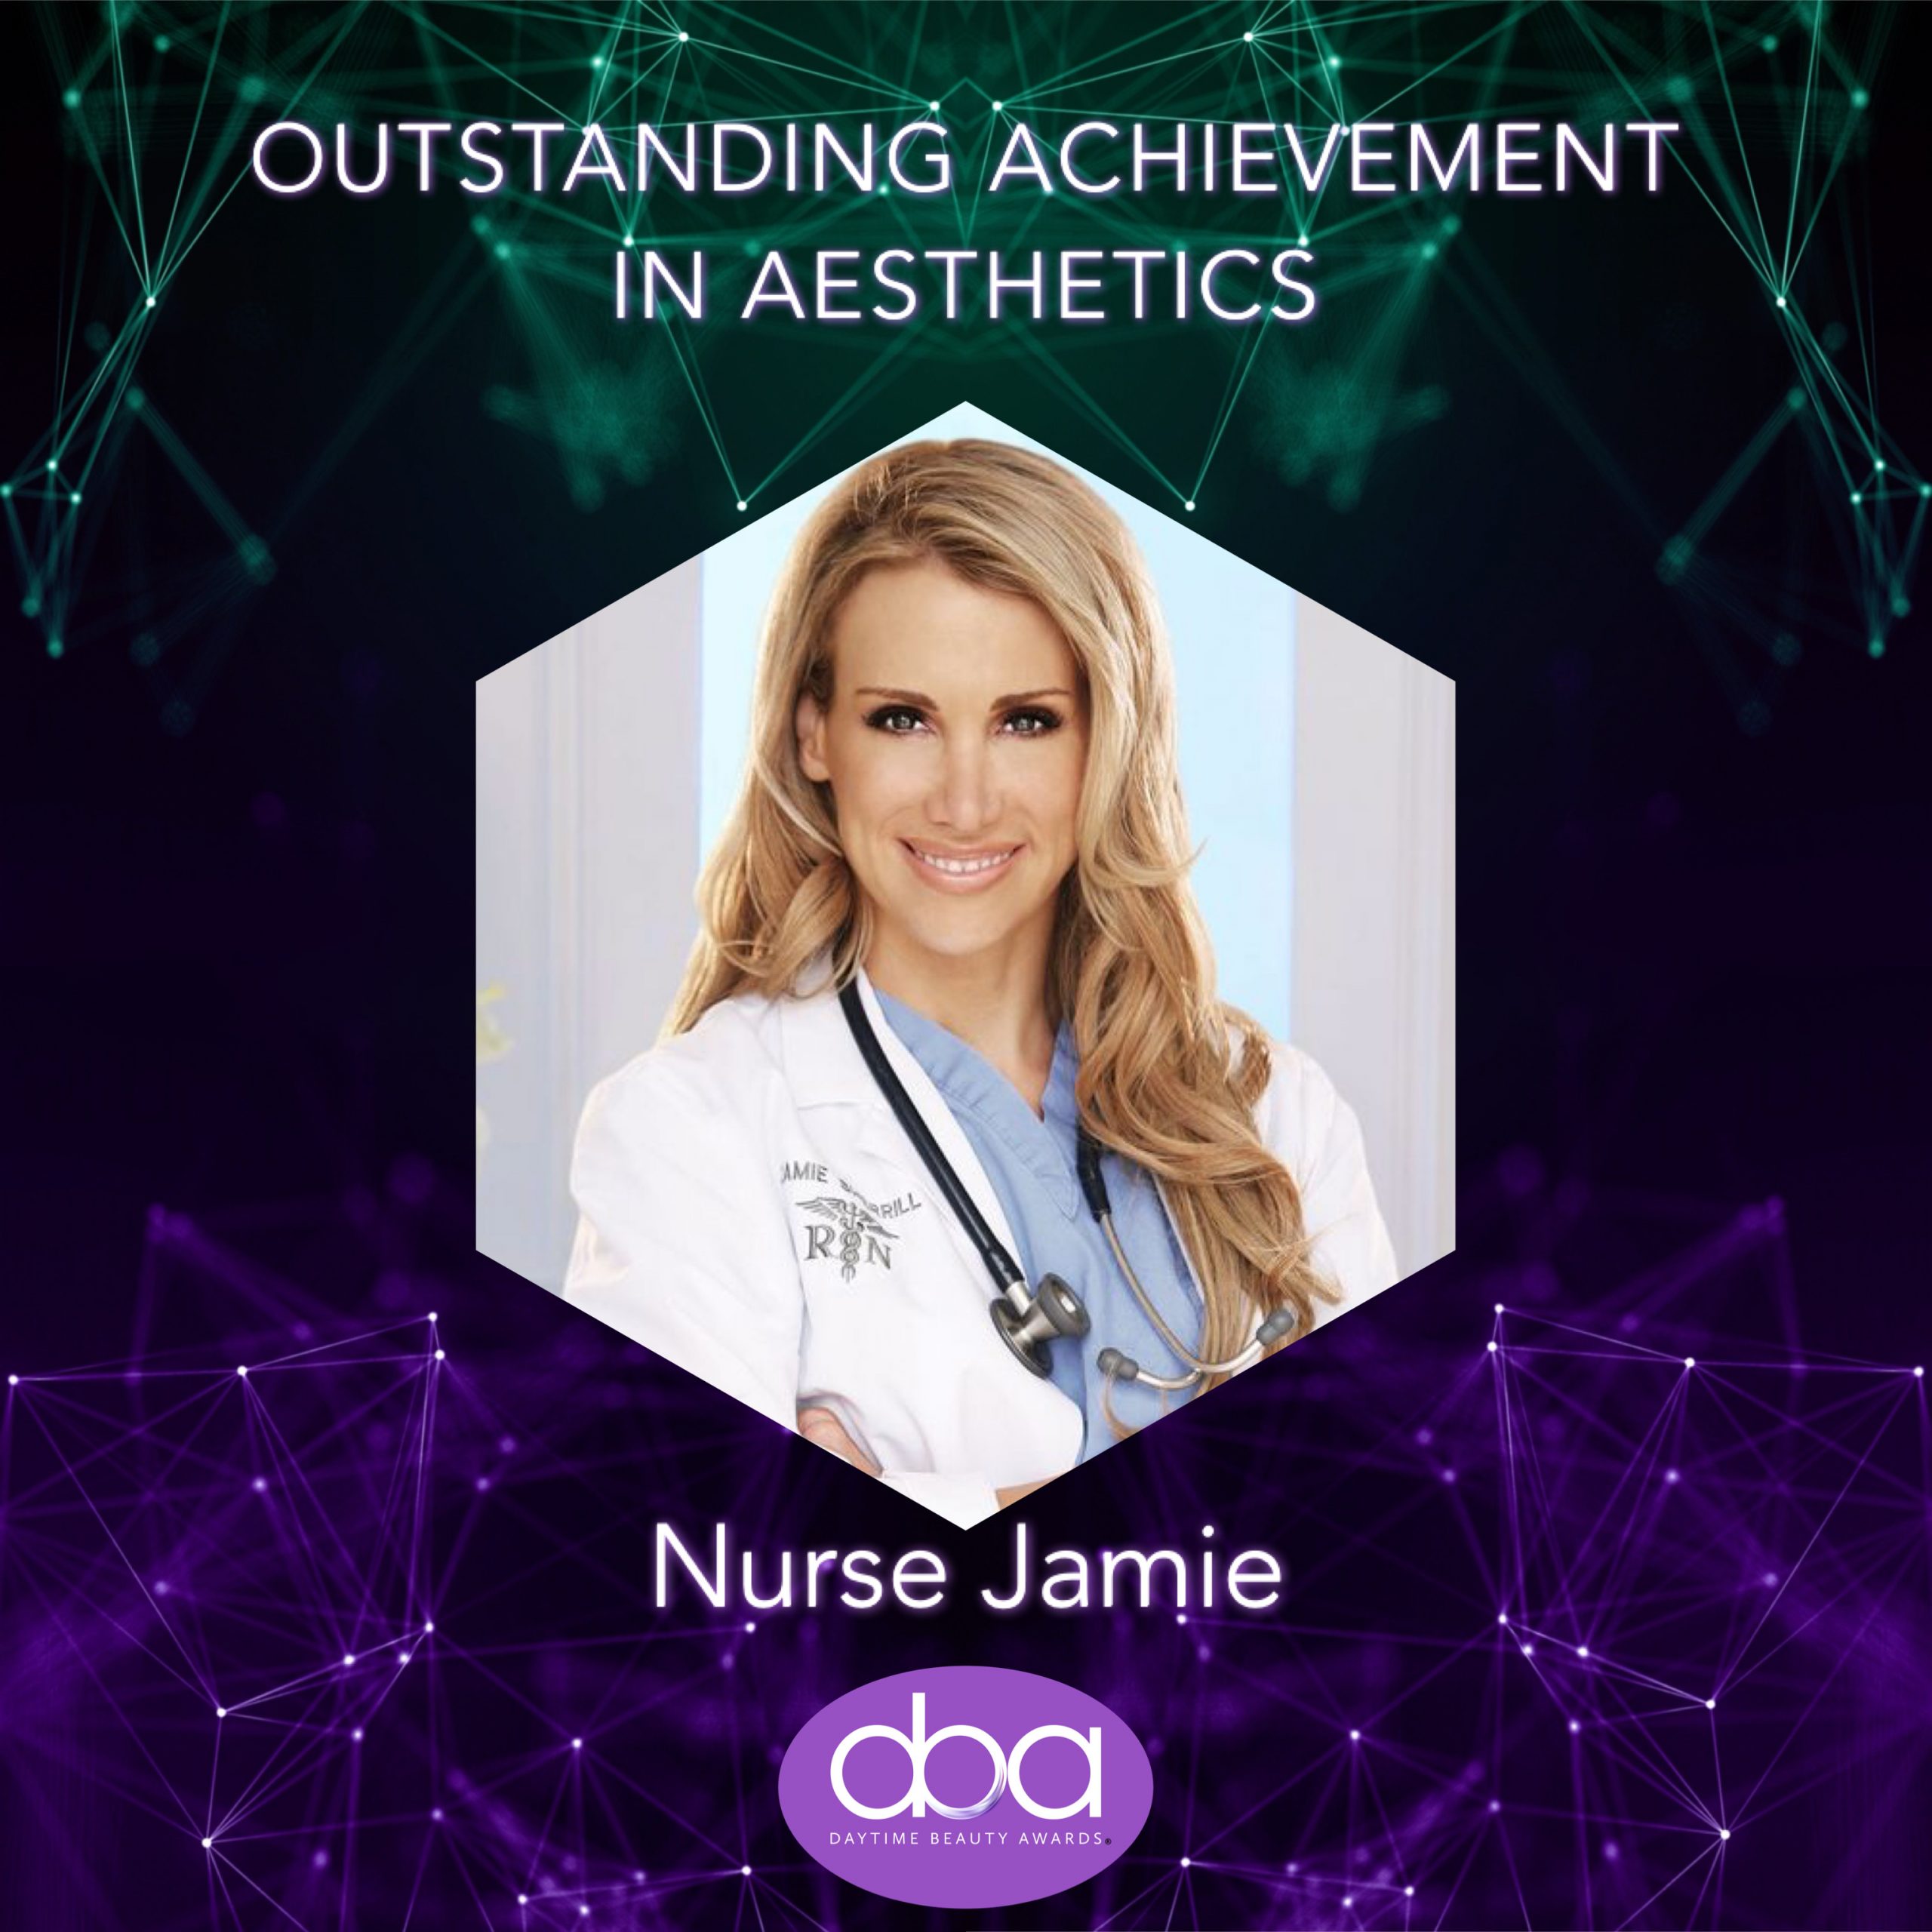 nurse jamie, daytime beauty awards, honorary award, aesthetics